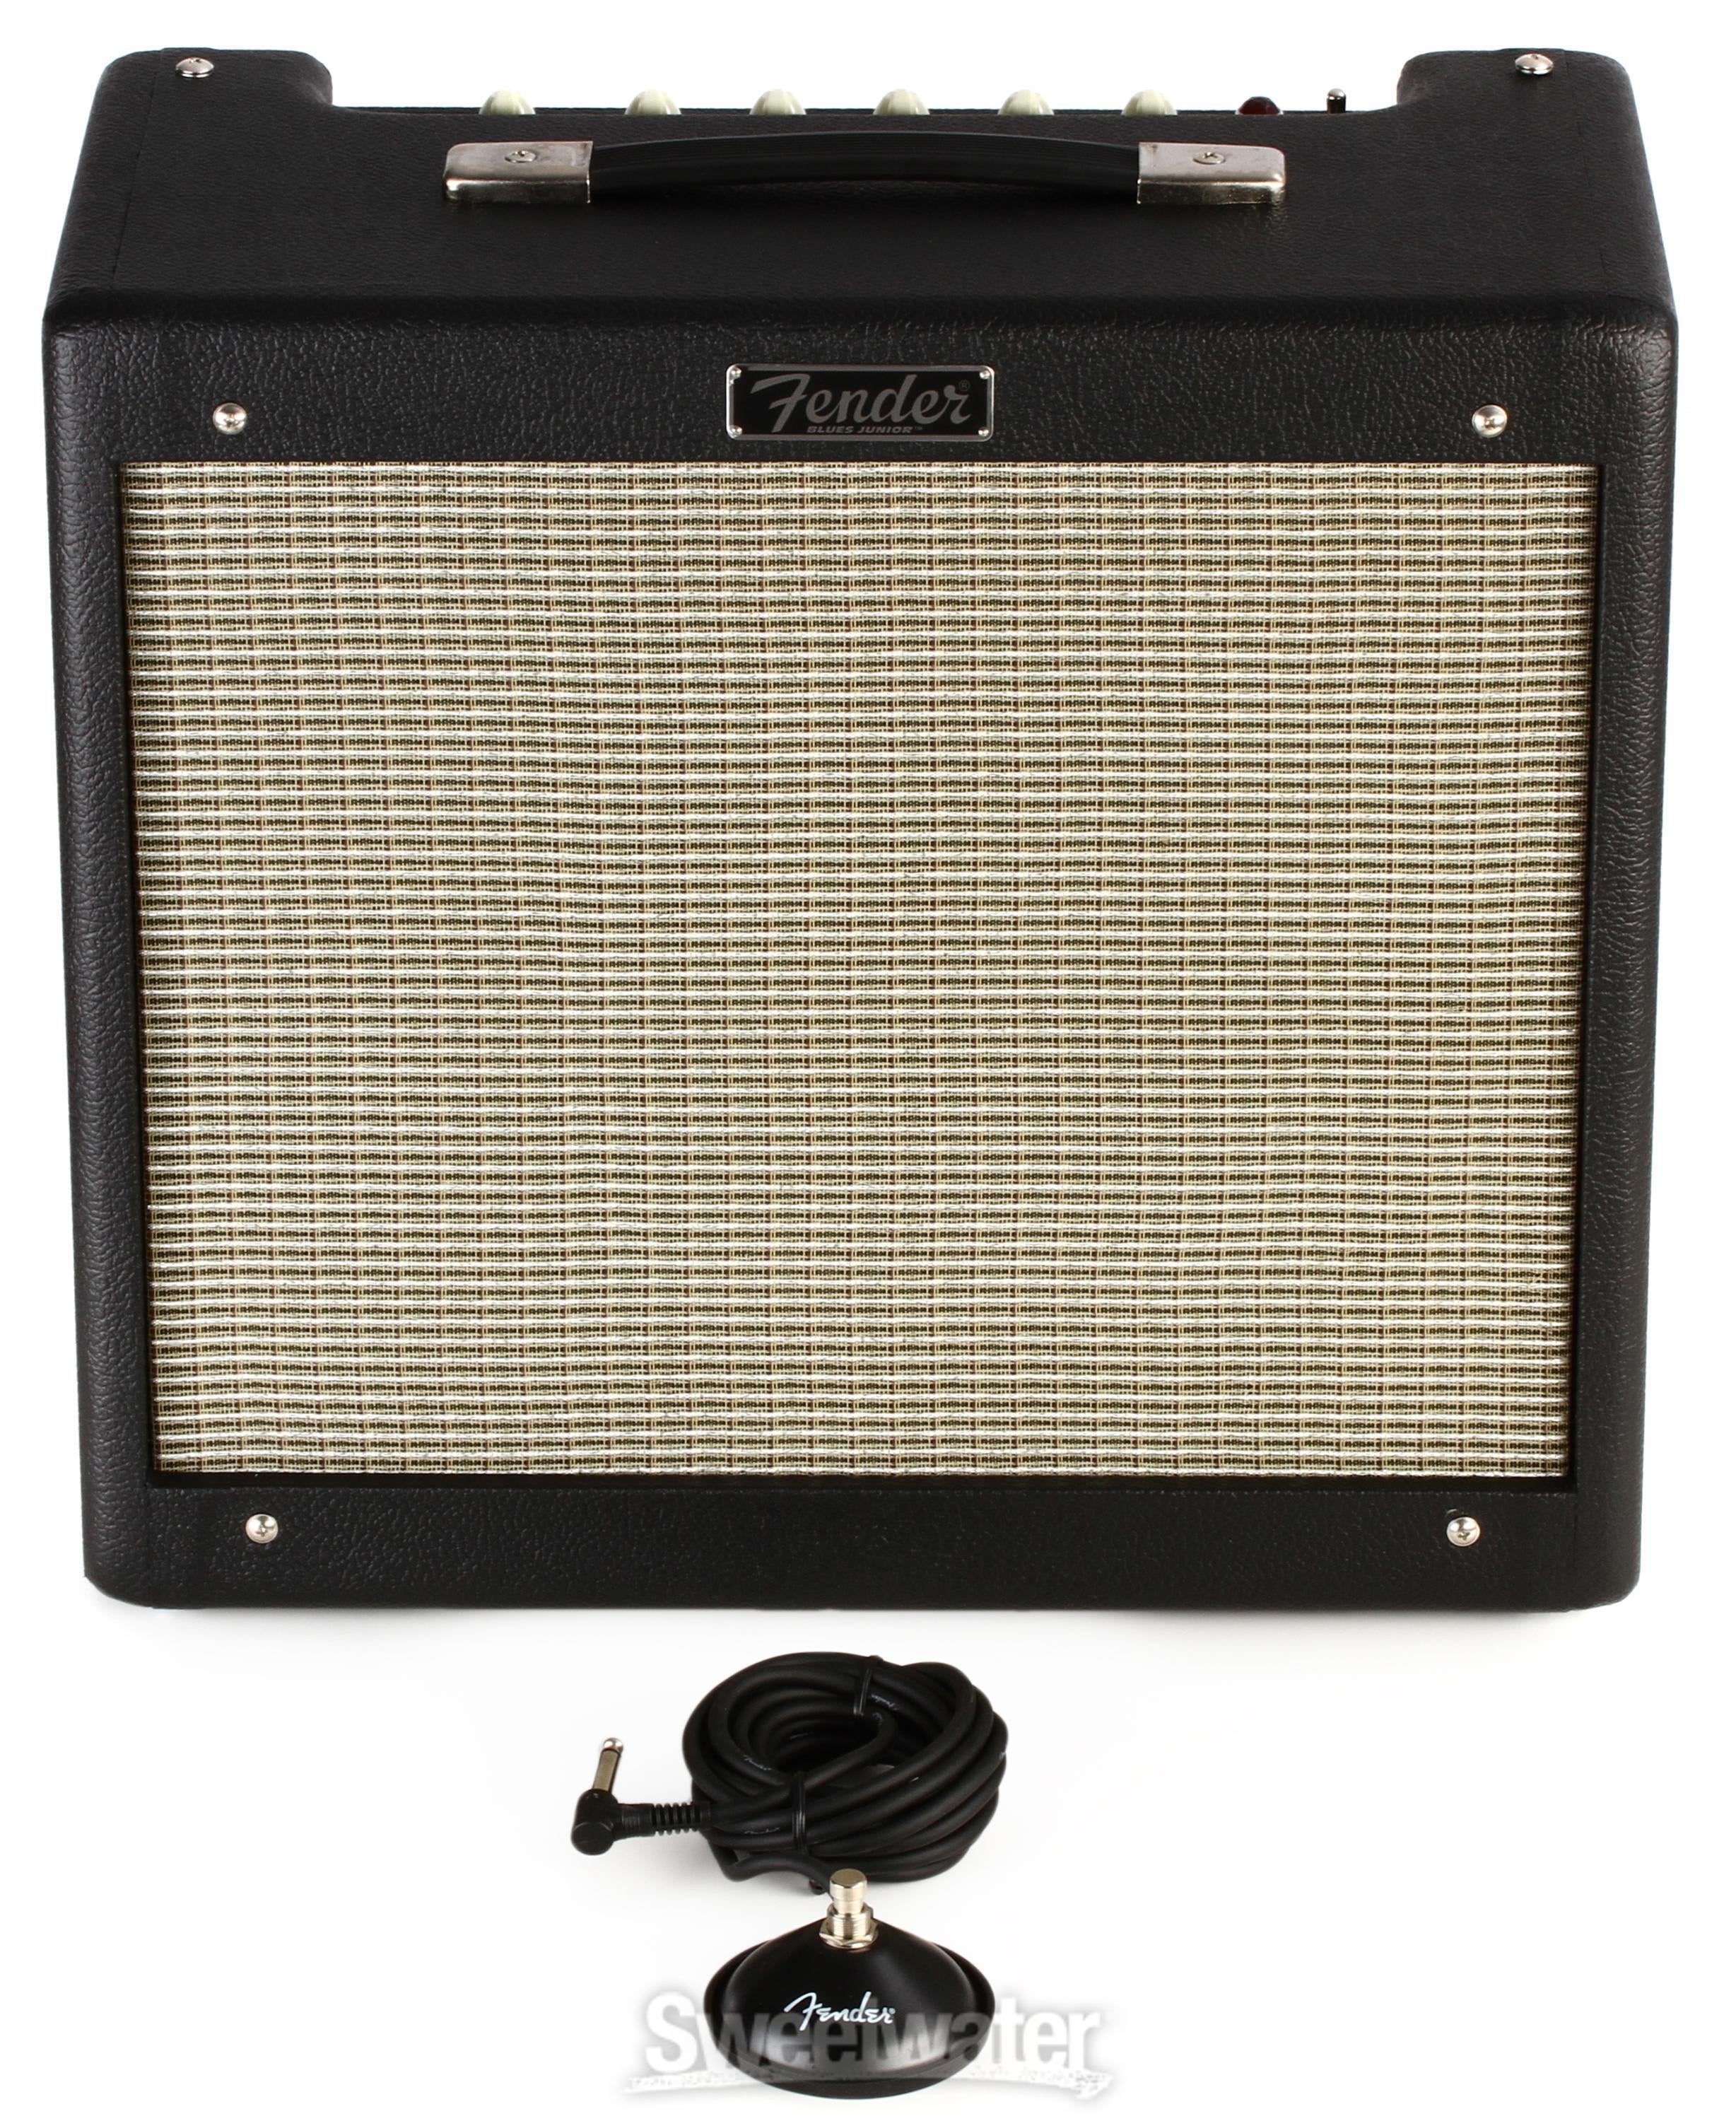 Fender Blues Junior IV 1 x 12-inch 15-watt Tube Combo Amp